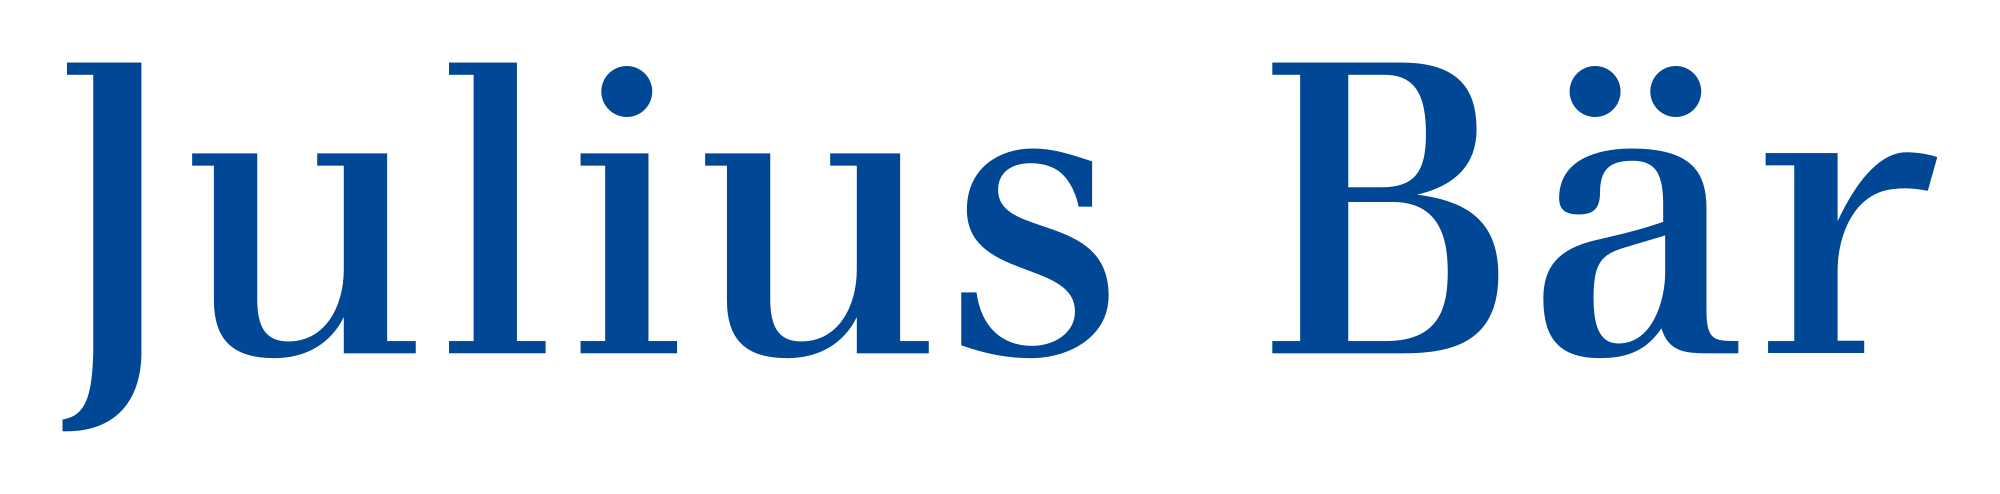 Julius Baer Brand Logo